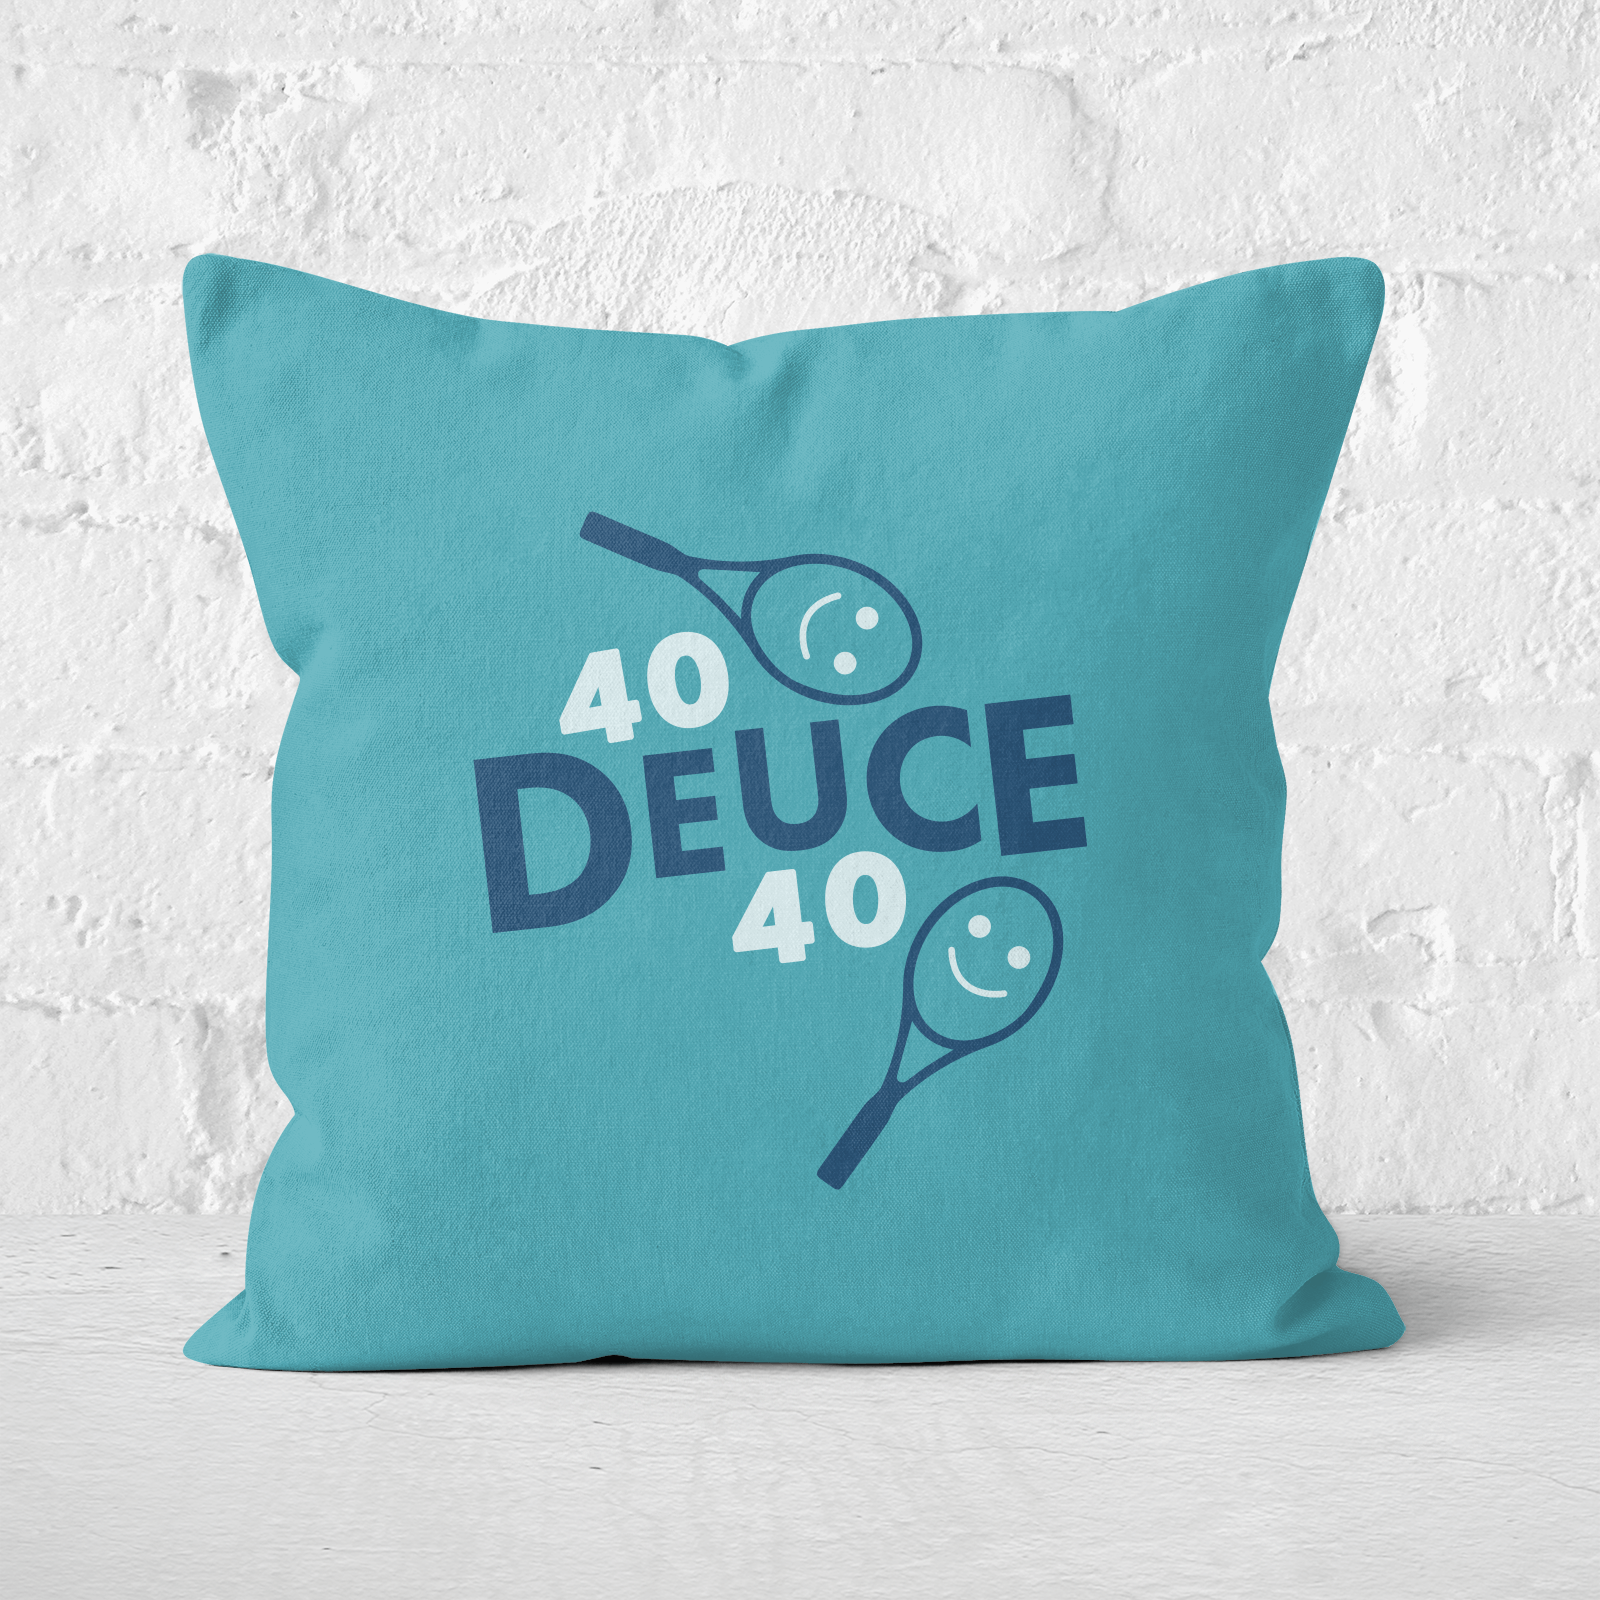 40 Deuce 40 Square Cushion   60x60cm   Soft Touch